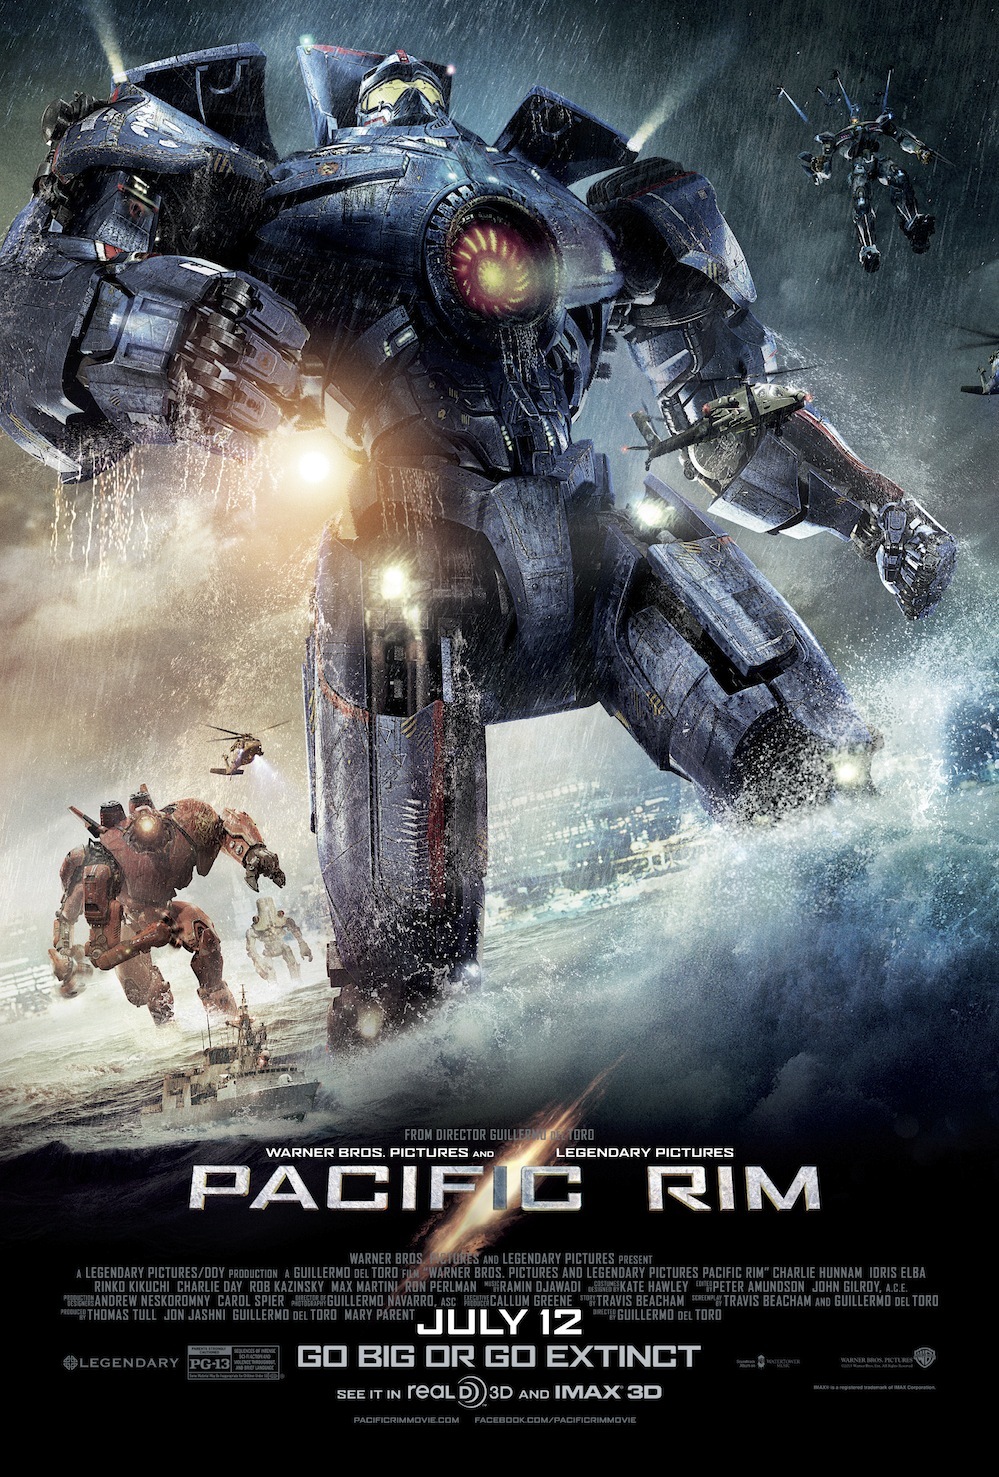 Poster Transformers - Filmes - Uau Posters